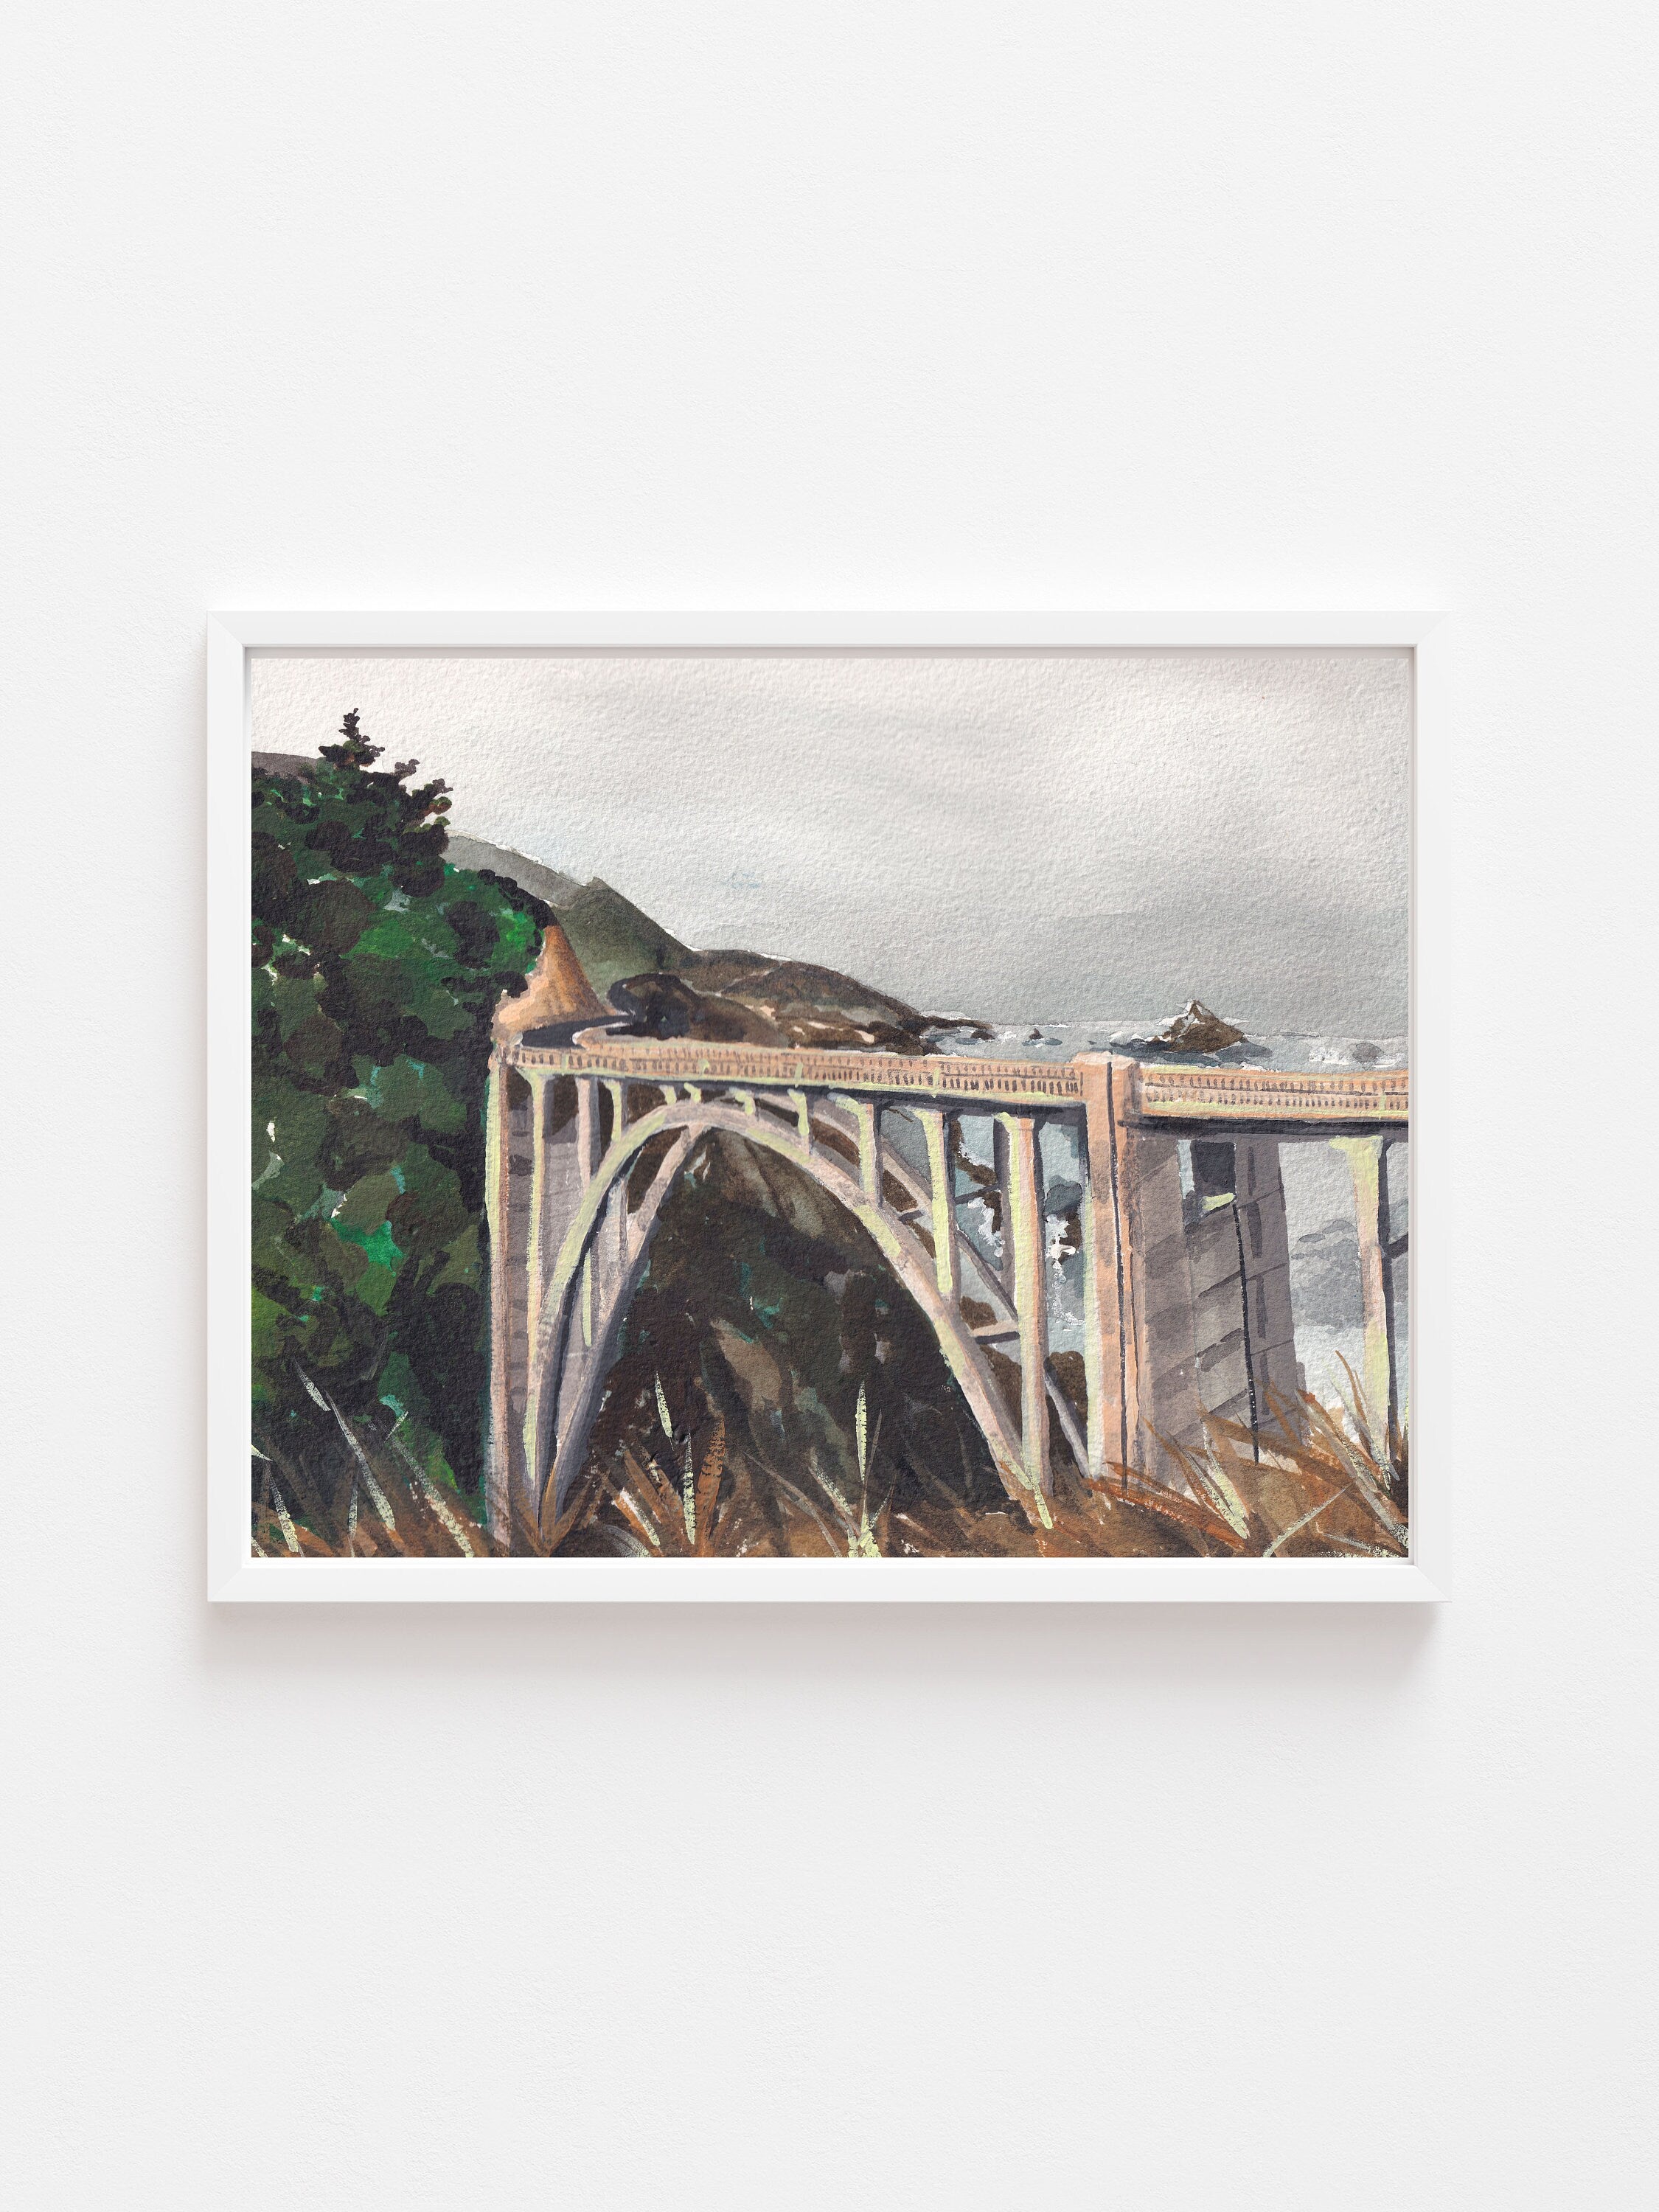 Bixby creek bridge print of painting by Medjool Studio. Print of original gouache painting featuring the Bixby Bridge in Big Sur California and landscape with greenery.